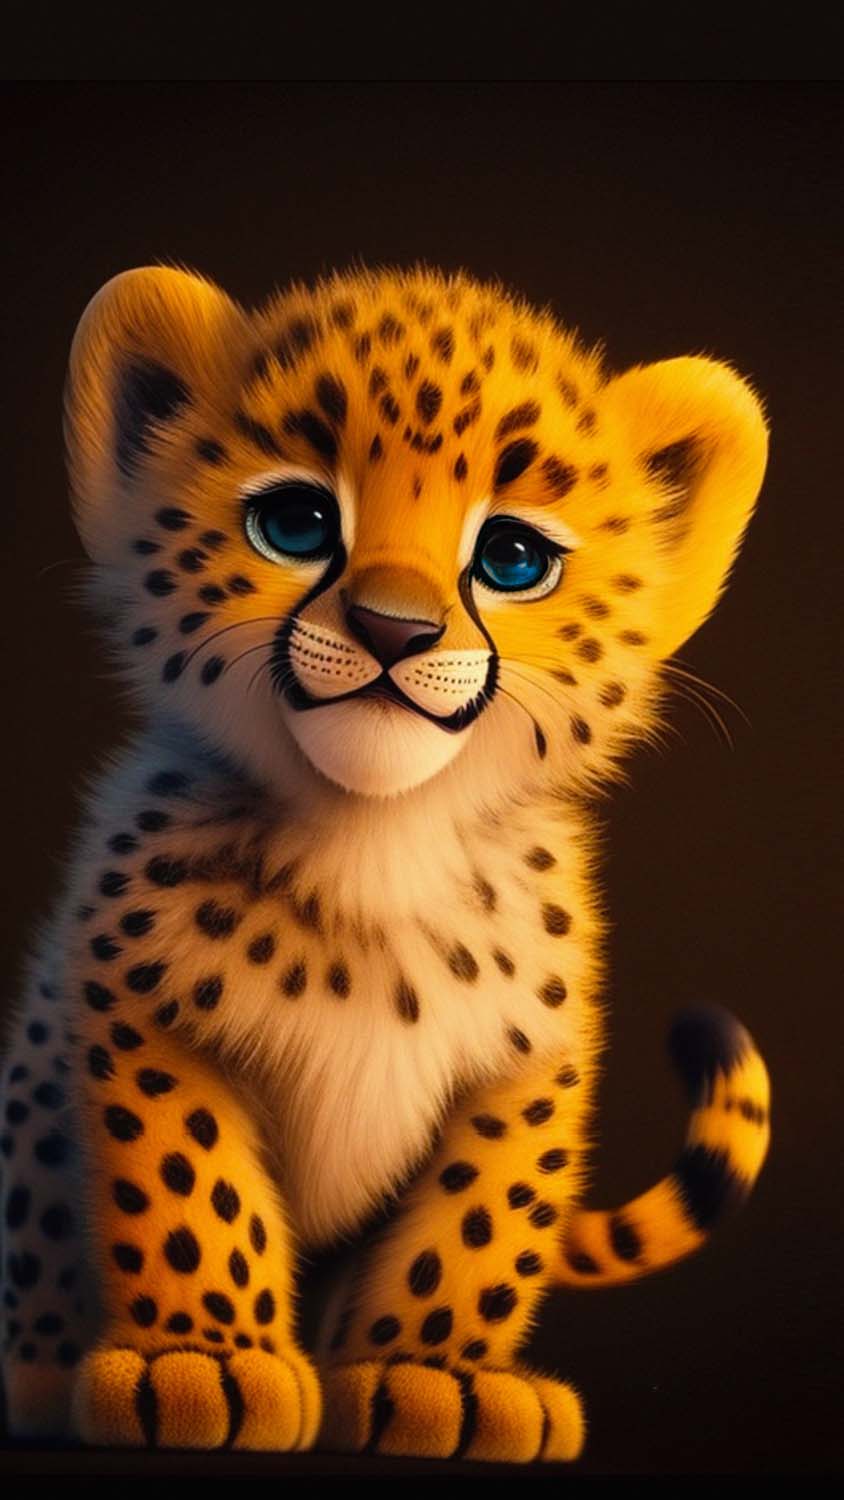 BBaby Cheetah iPhone Wallpaper HD